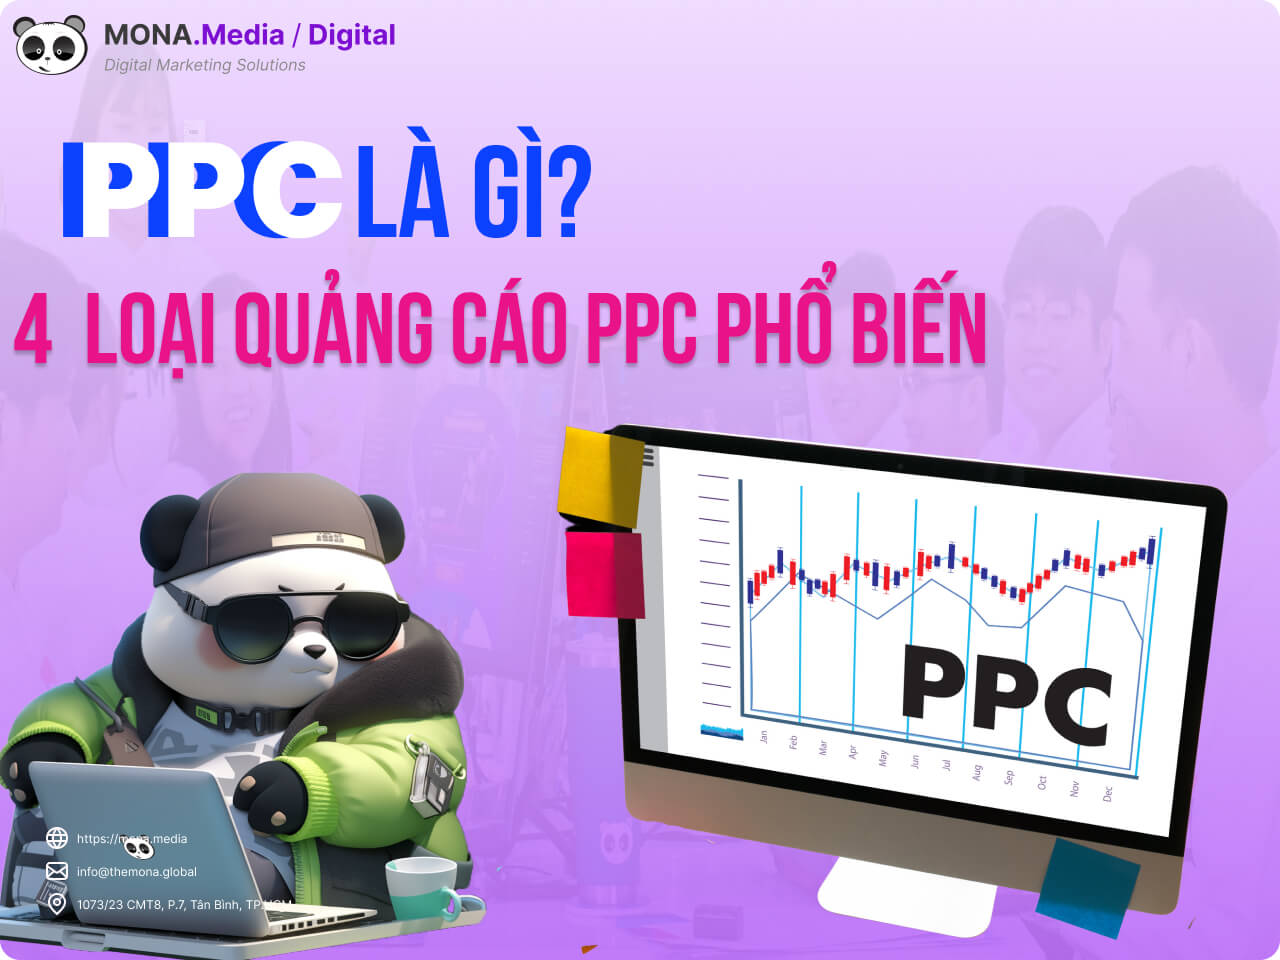 PPC (Pay per click)